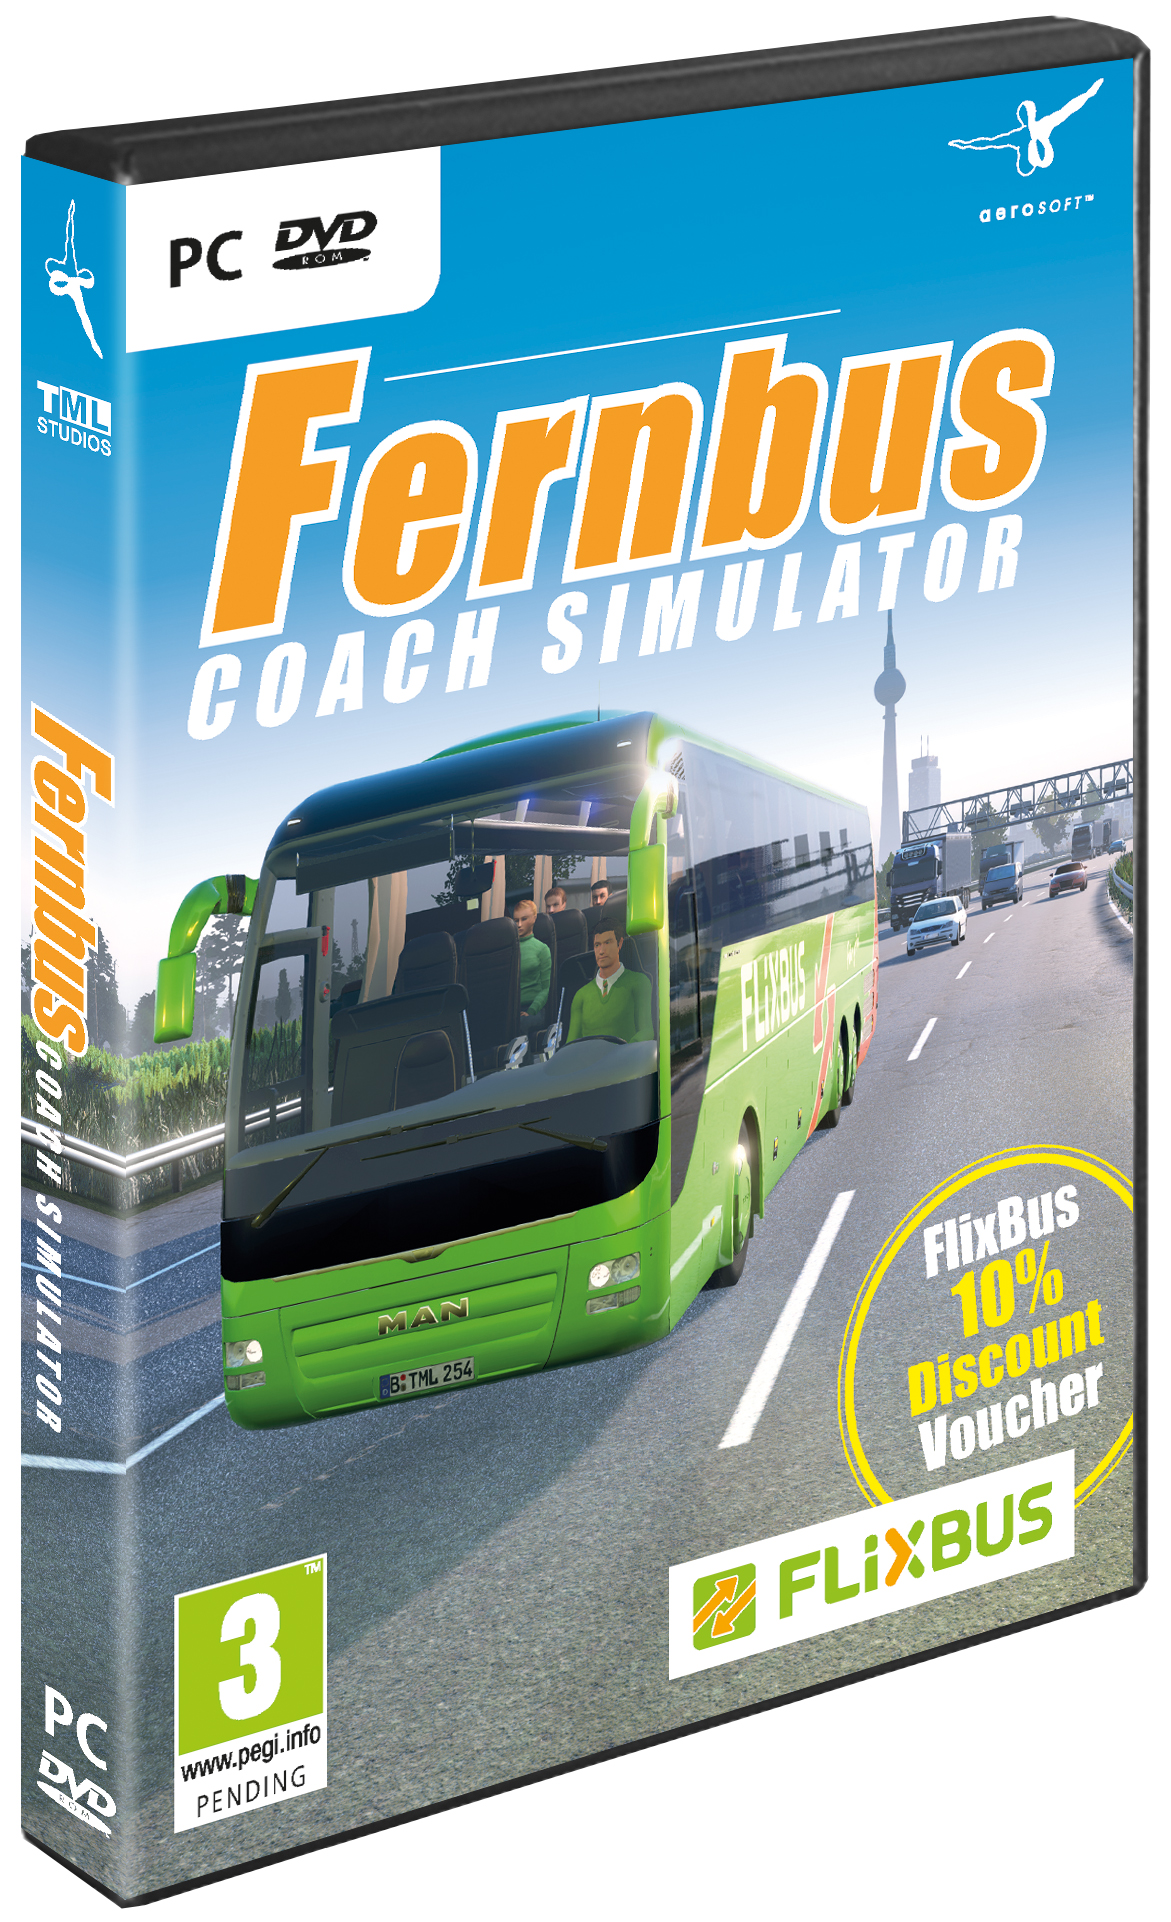 install game fernbus coach simulator